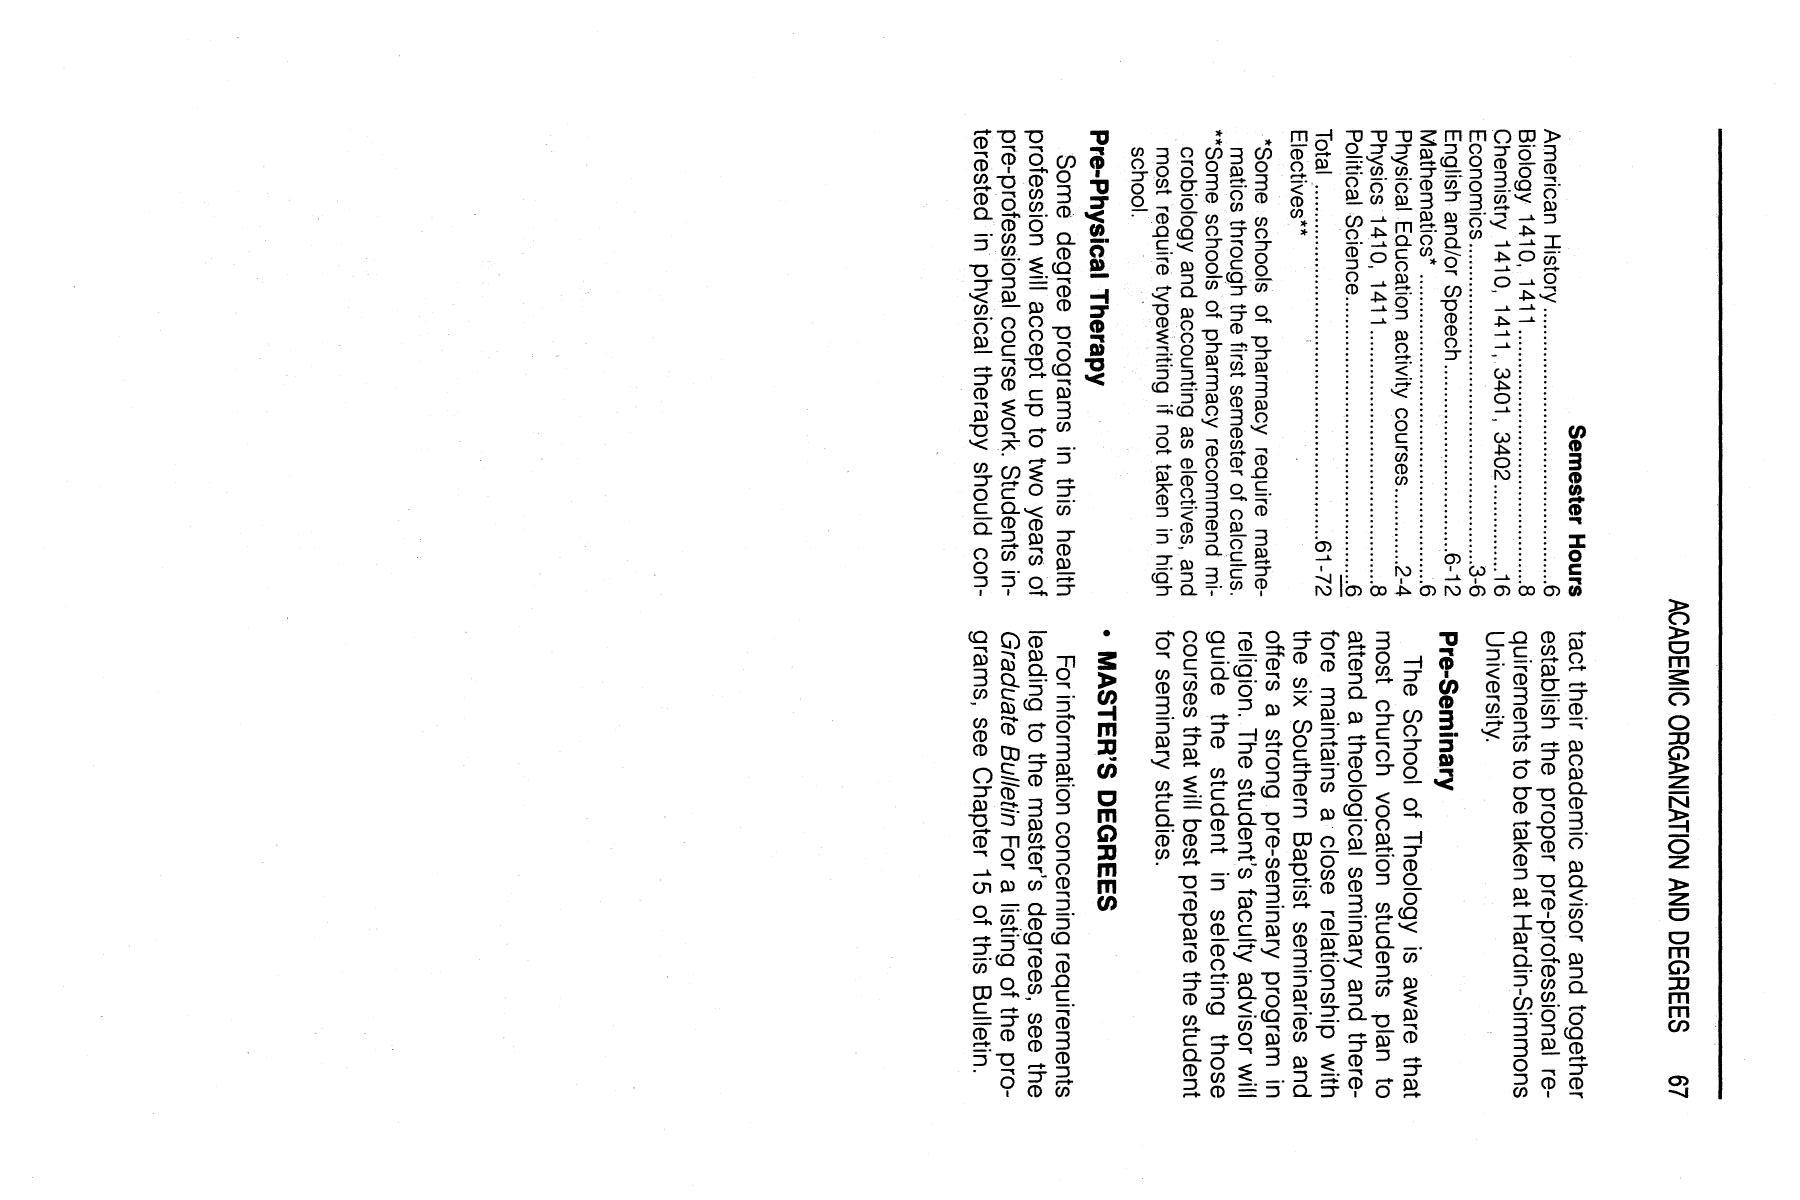 Catalog of Hardin-Simmons University, 1994-1995 Undergraduate Bulletin
                                                
                                                    67
                                                